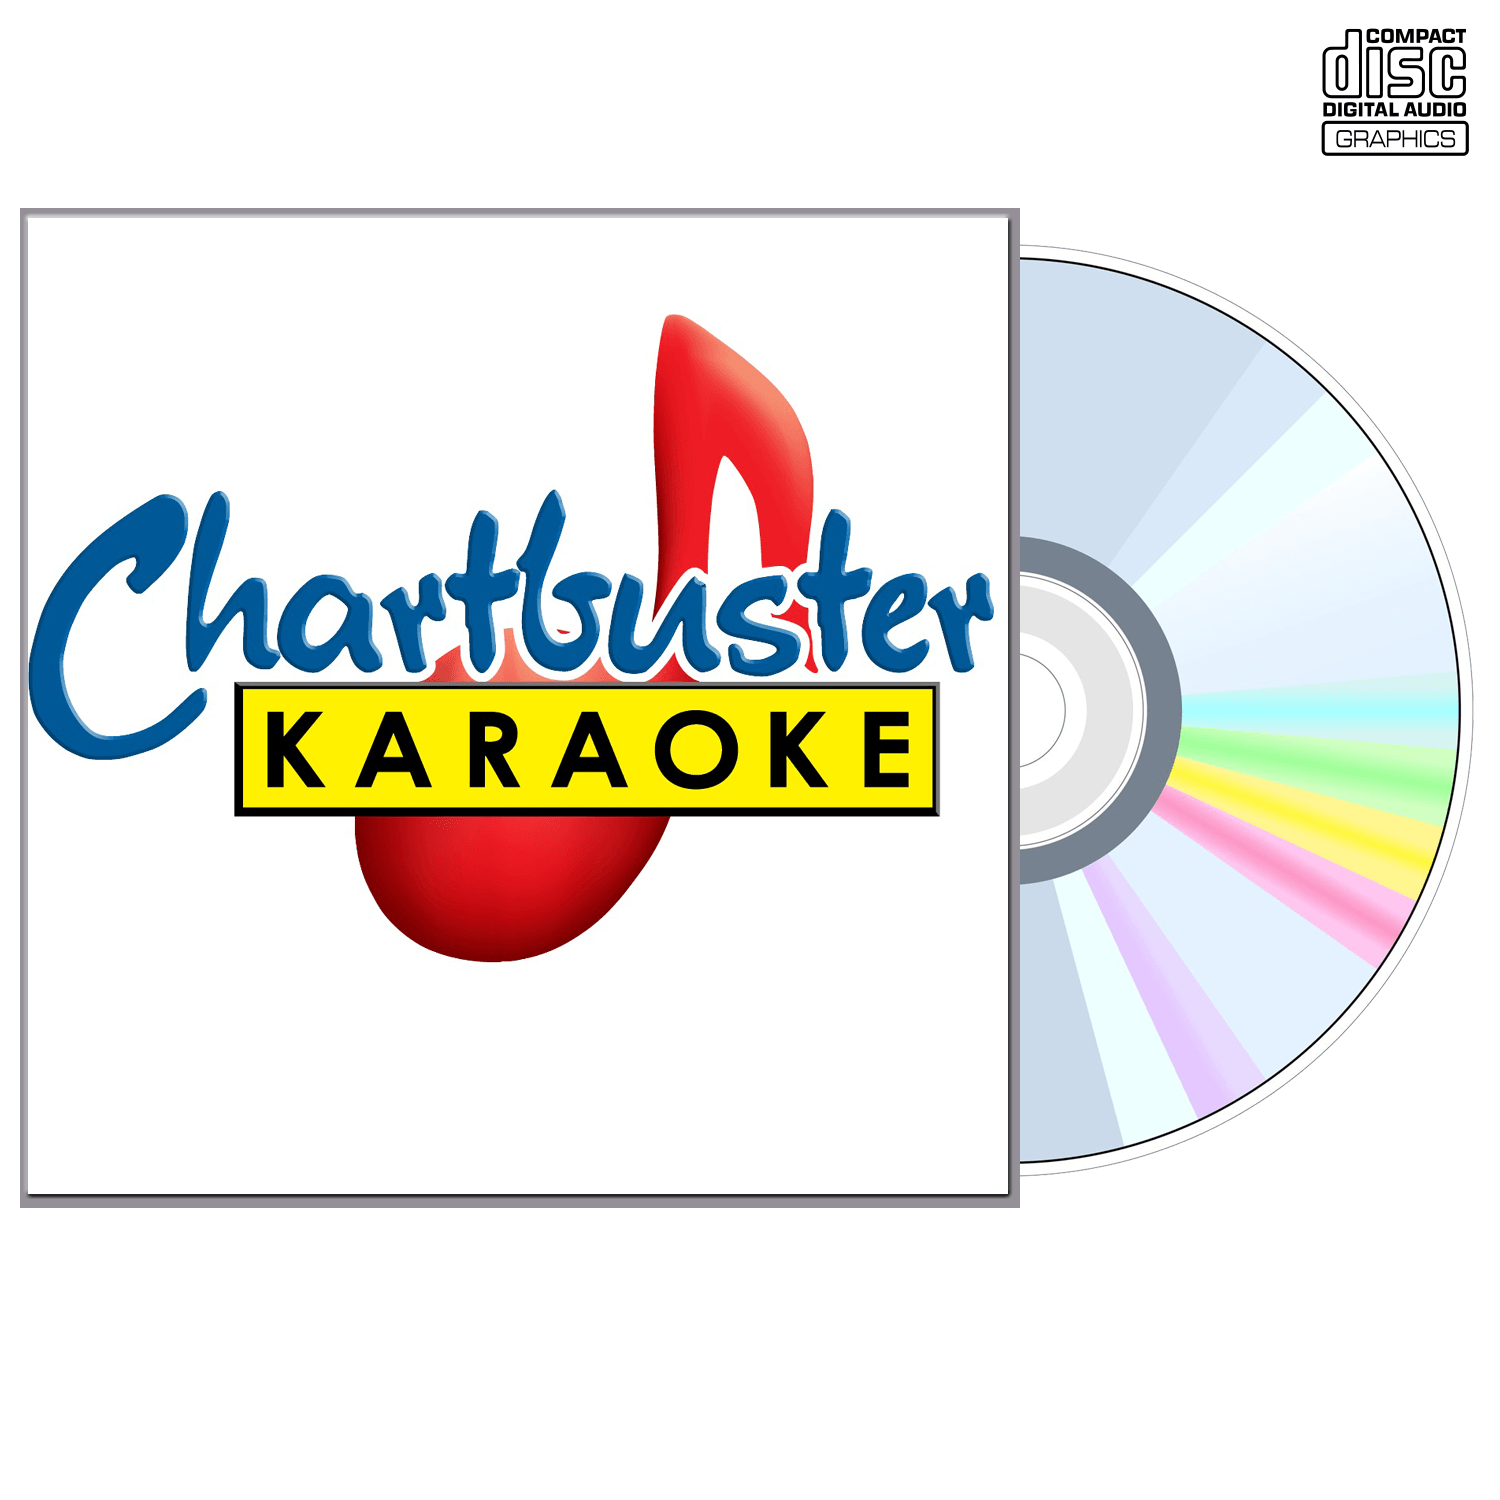 Don Williams Vol 1 - CD+G - Chartbuster Karaoke - Karaoke Home Entertainment